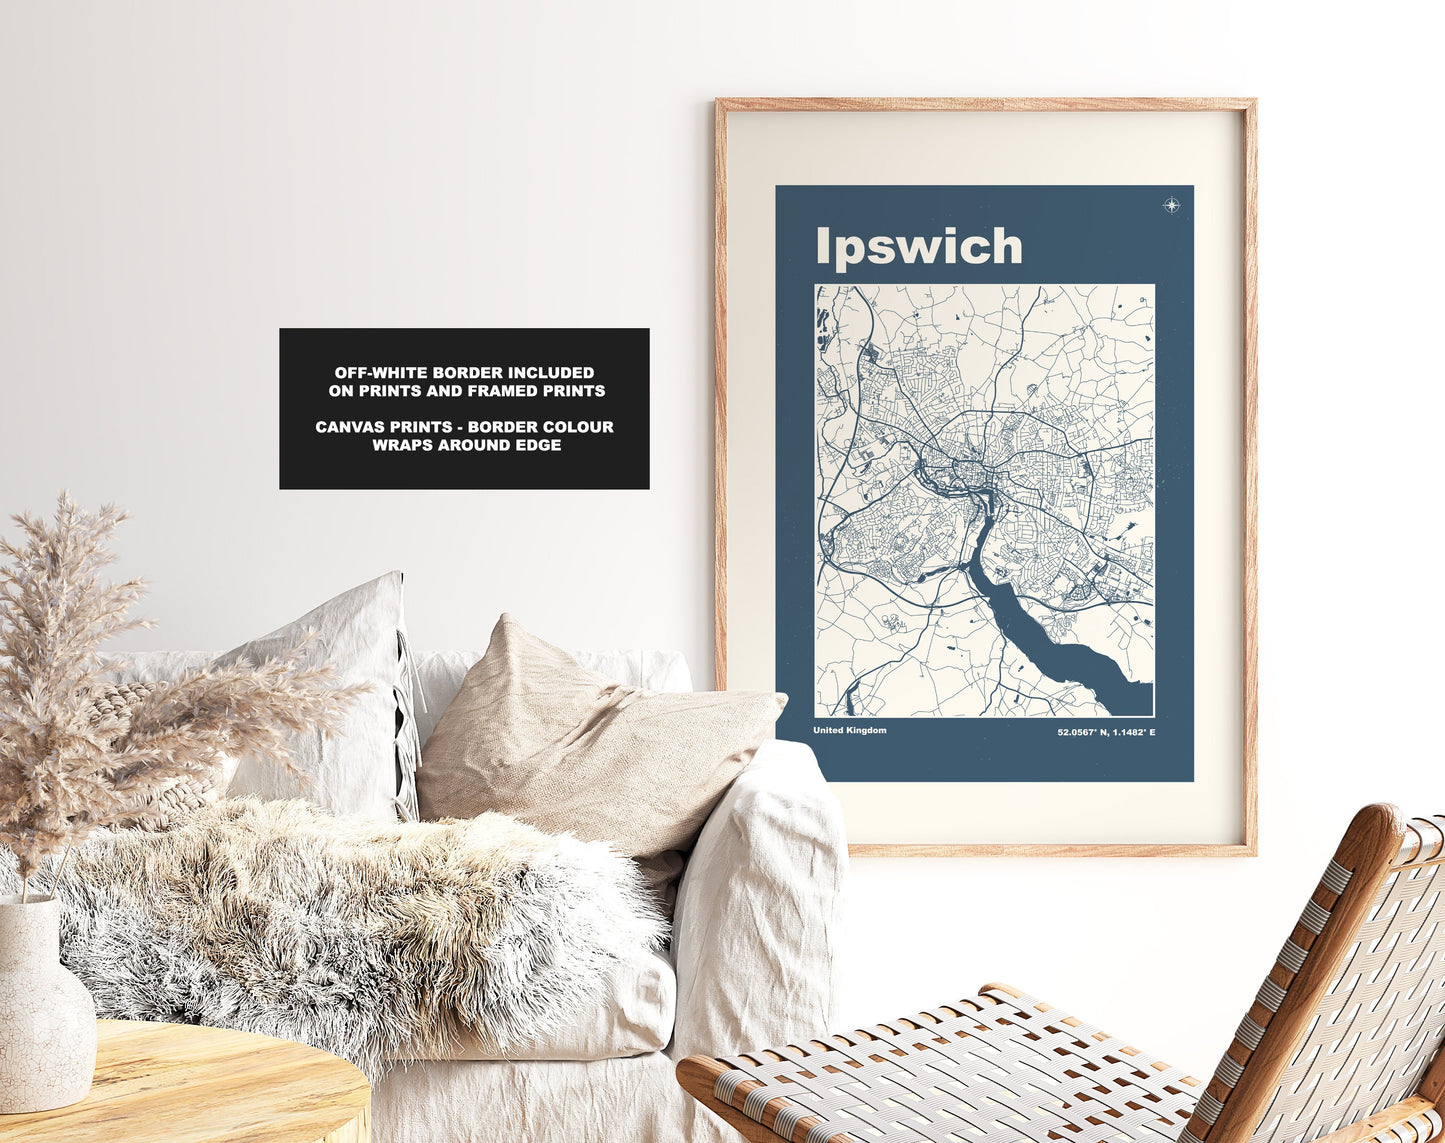 Ipswich Print - Map Print - Mid Century Modern  - Retro - Vintage - Contemporary - Ipswich Print - Map - Map Poster - Gift - Norfolk